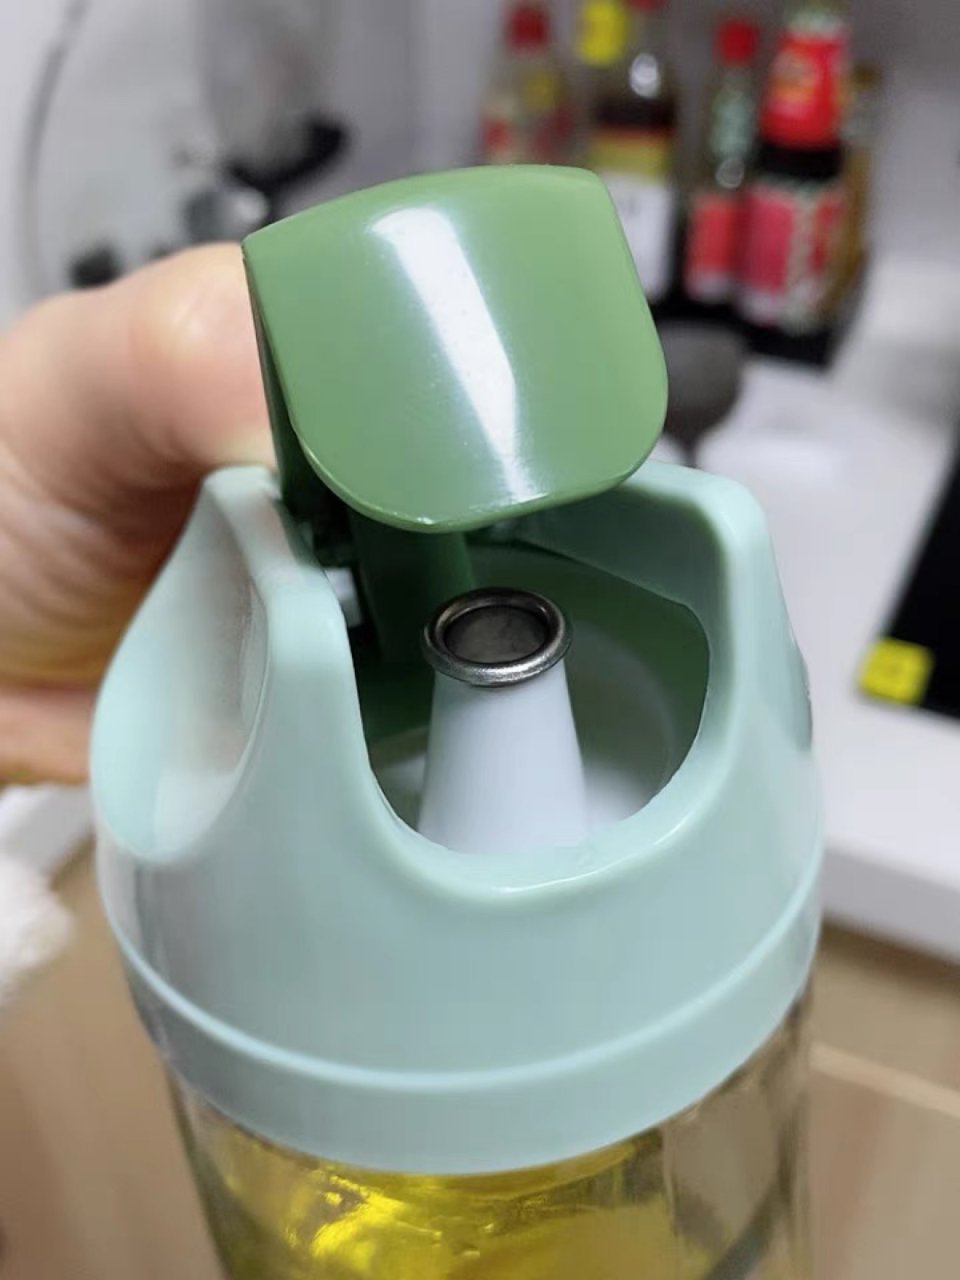 Olive Oil Bottle Dispenser for Kitchen, Auto Flip Soy Sauce Glass Condiment Container, Cooking Oil Vinegar Cruets Set, Measuring Syrup Bottle, Leakproof, Non-Drip Spout,Non-Slip Handle, Green, 25 OZ : Home & Kitchen